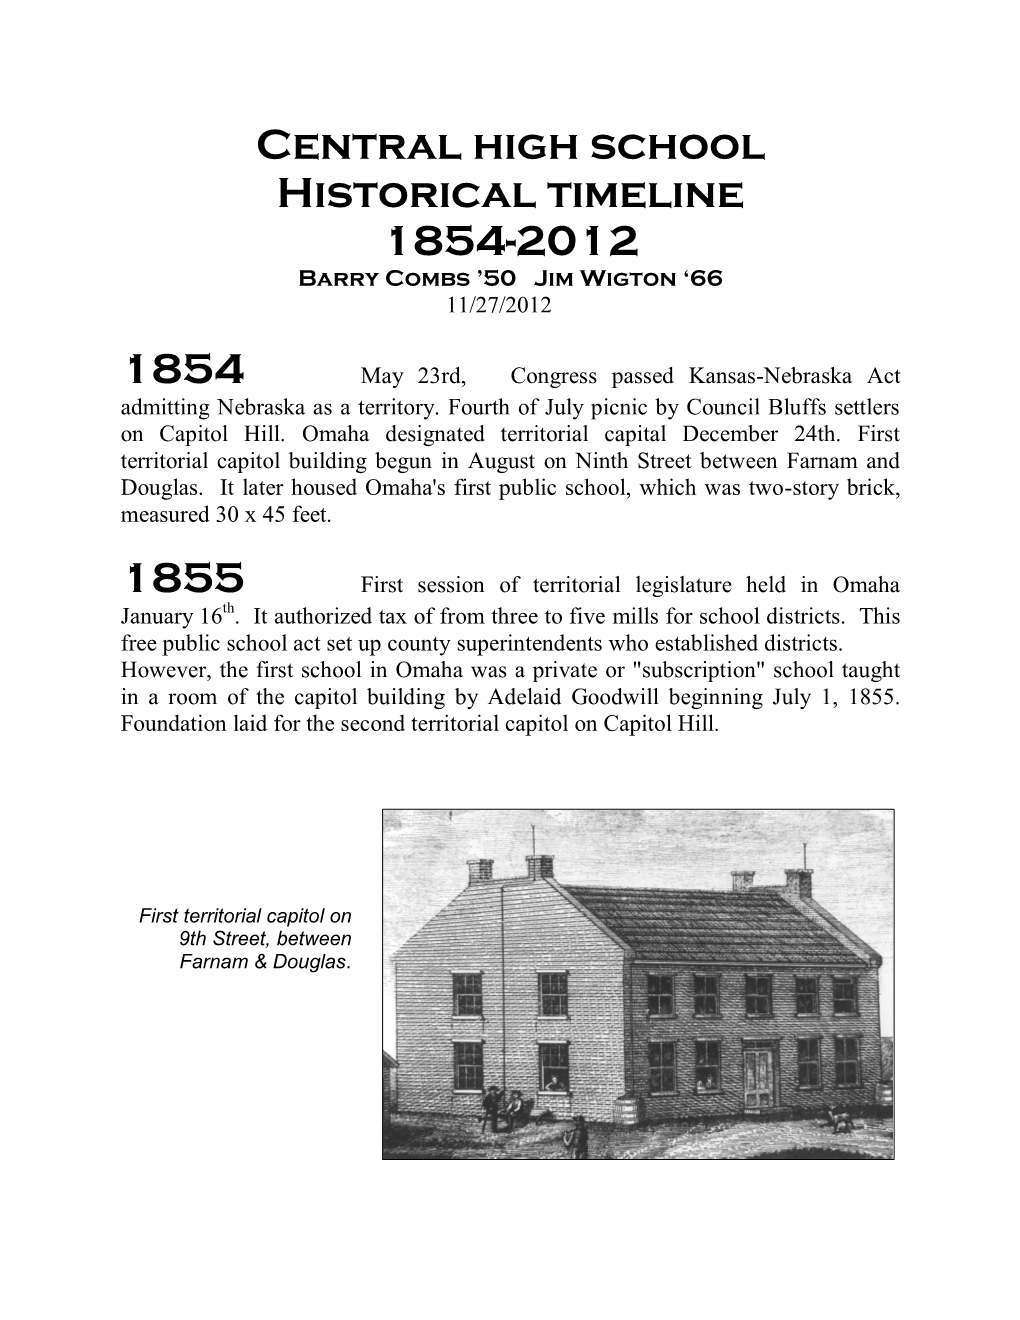 Central High School Historical Timeline 1854-2012 1854 1855